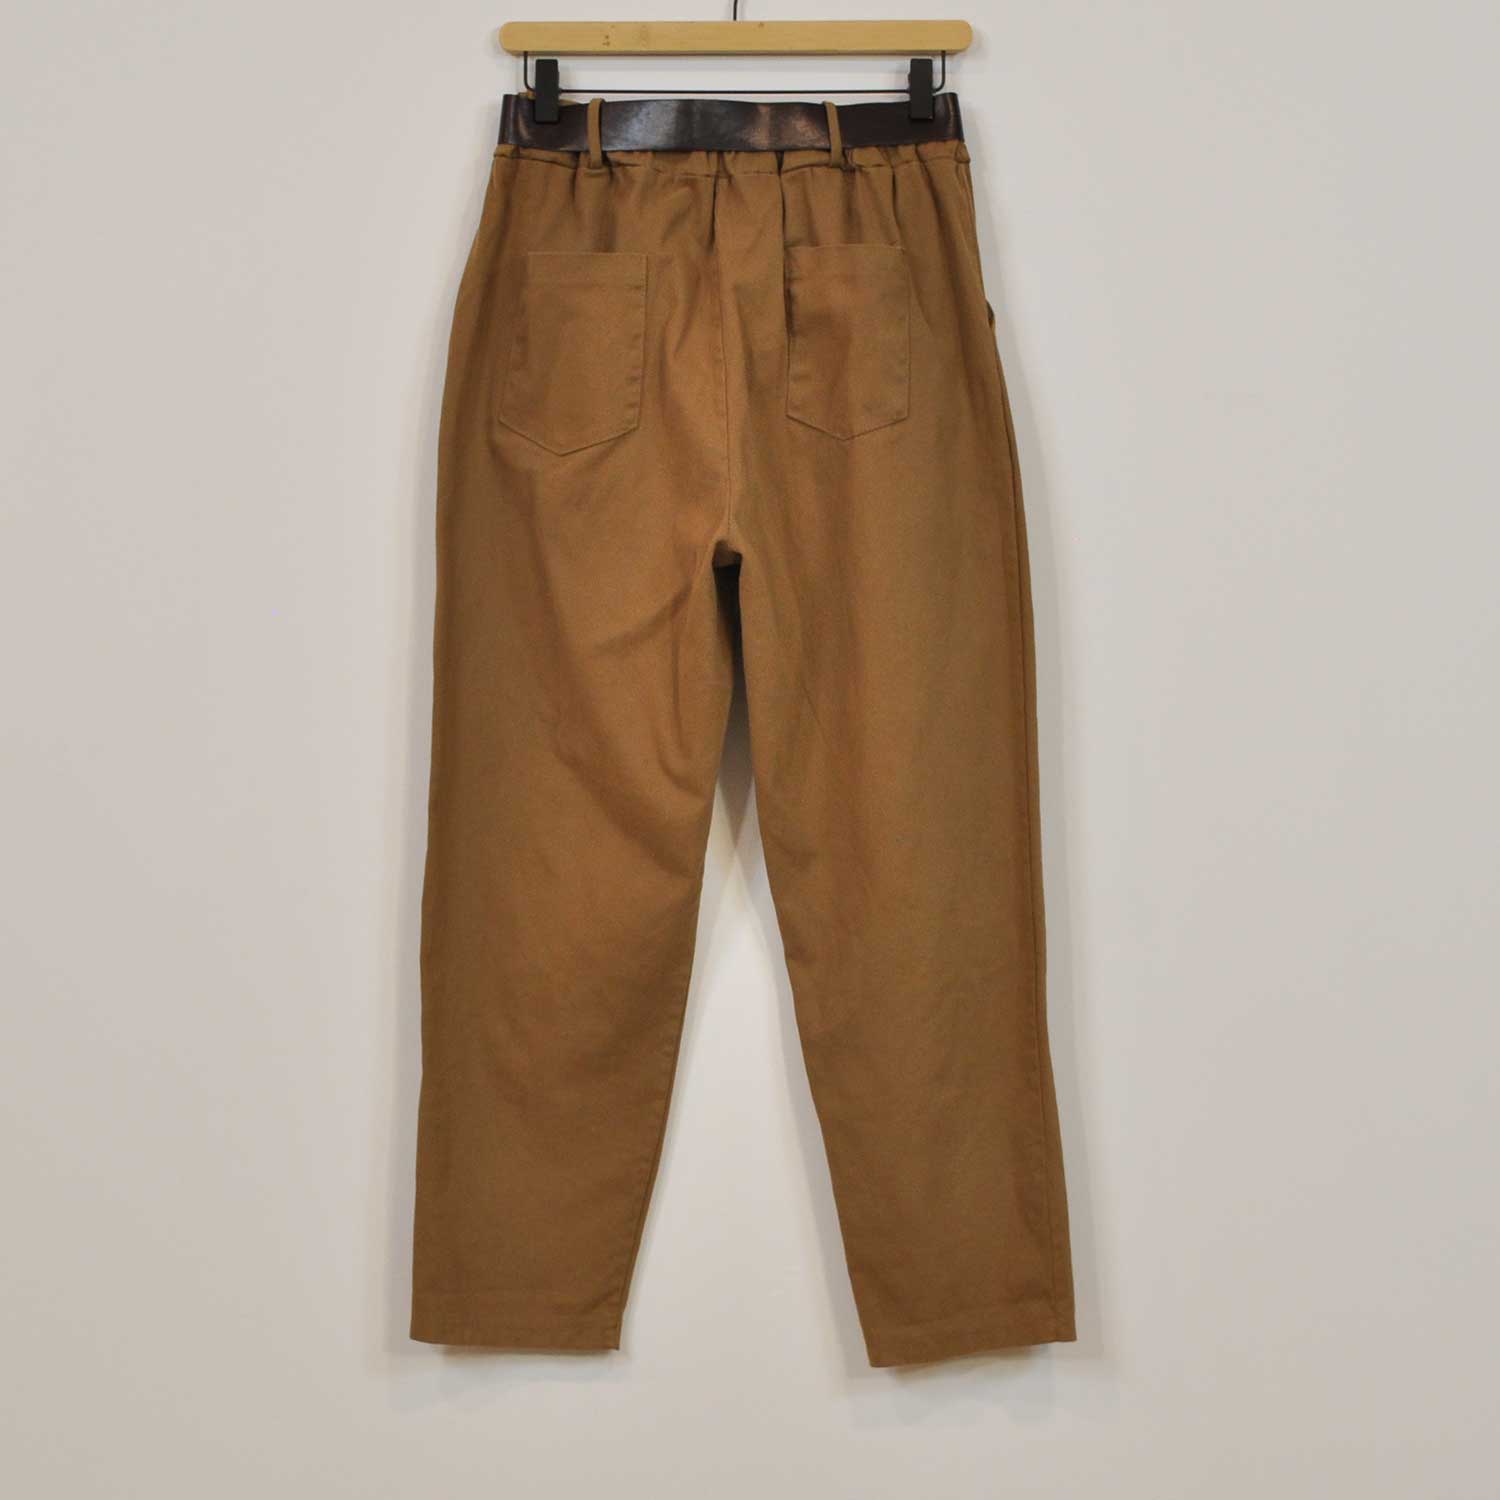 Pantalon ceinture poches marron